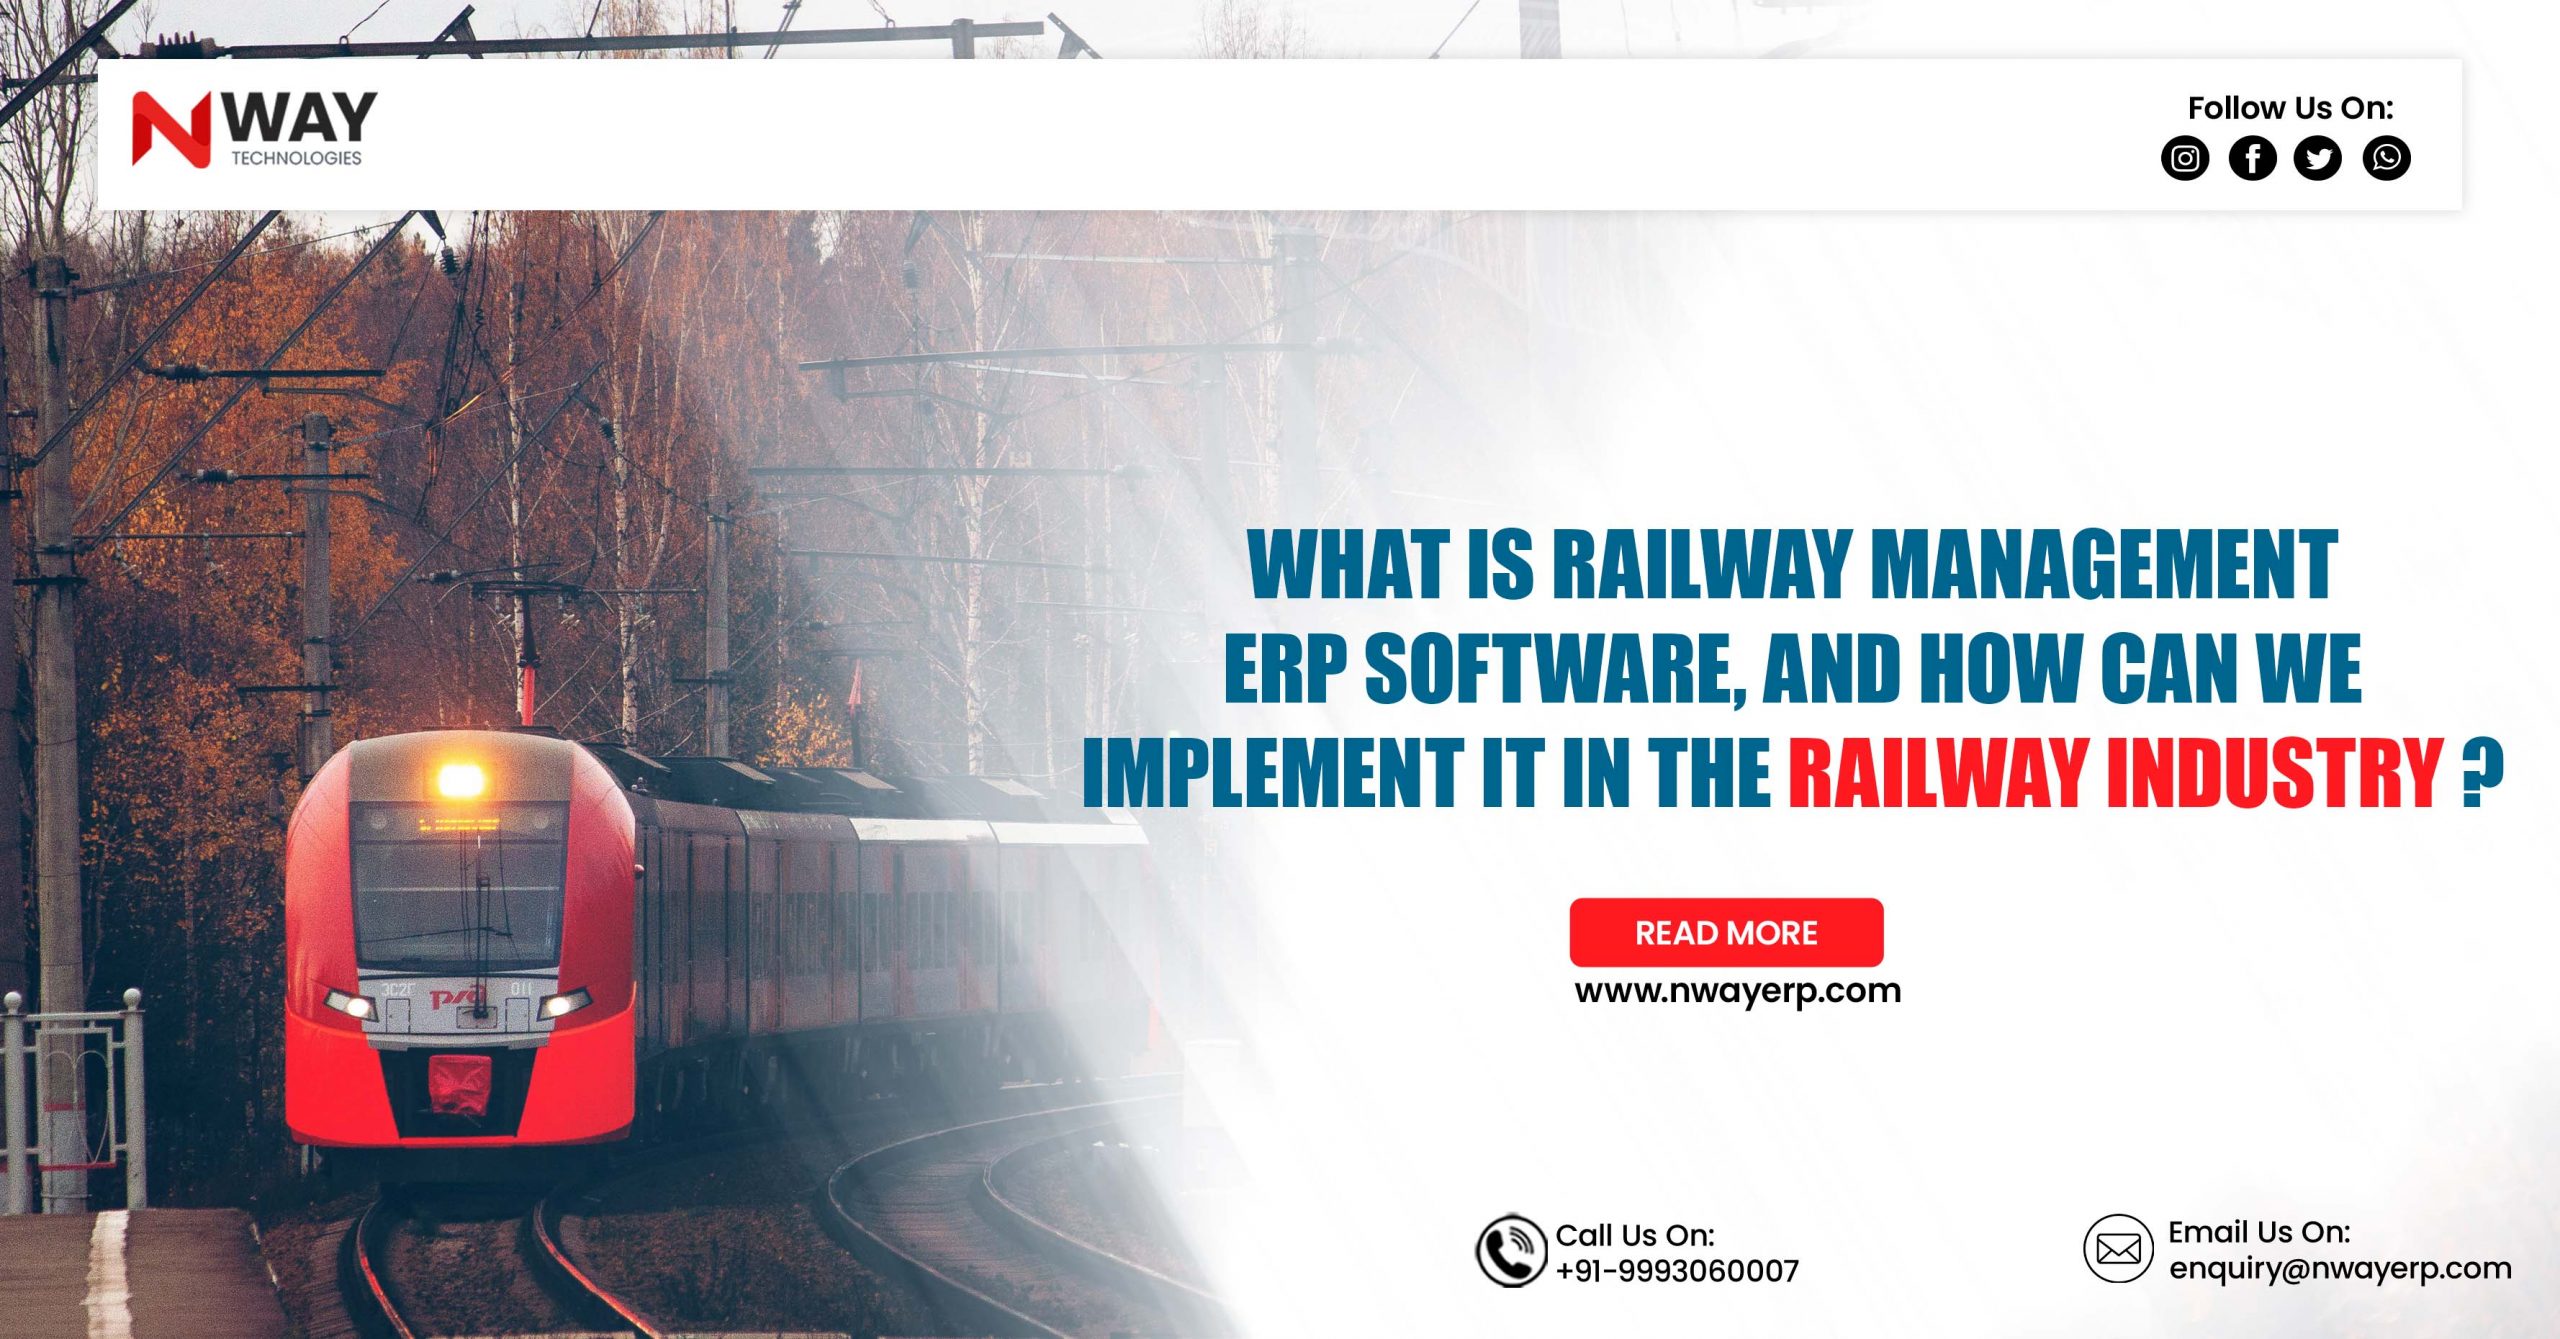 Railway management ERP software